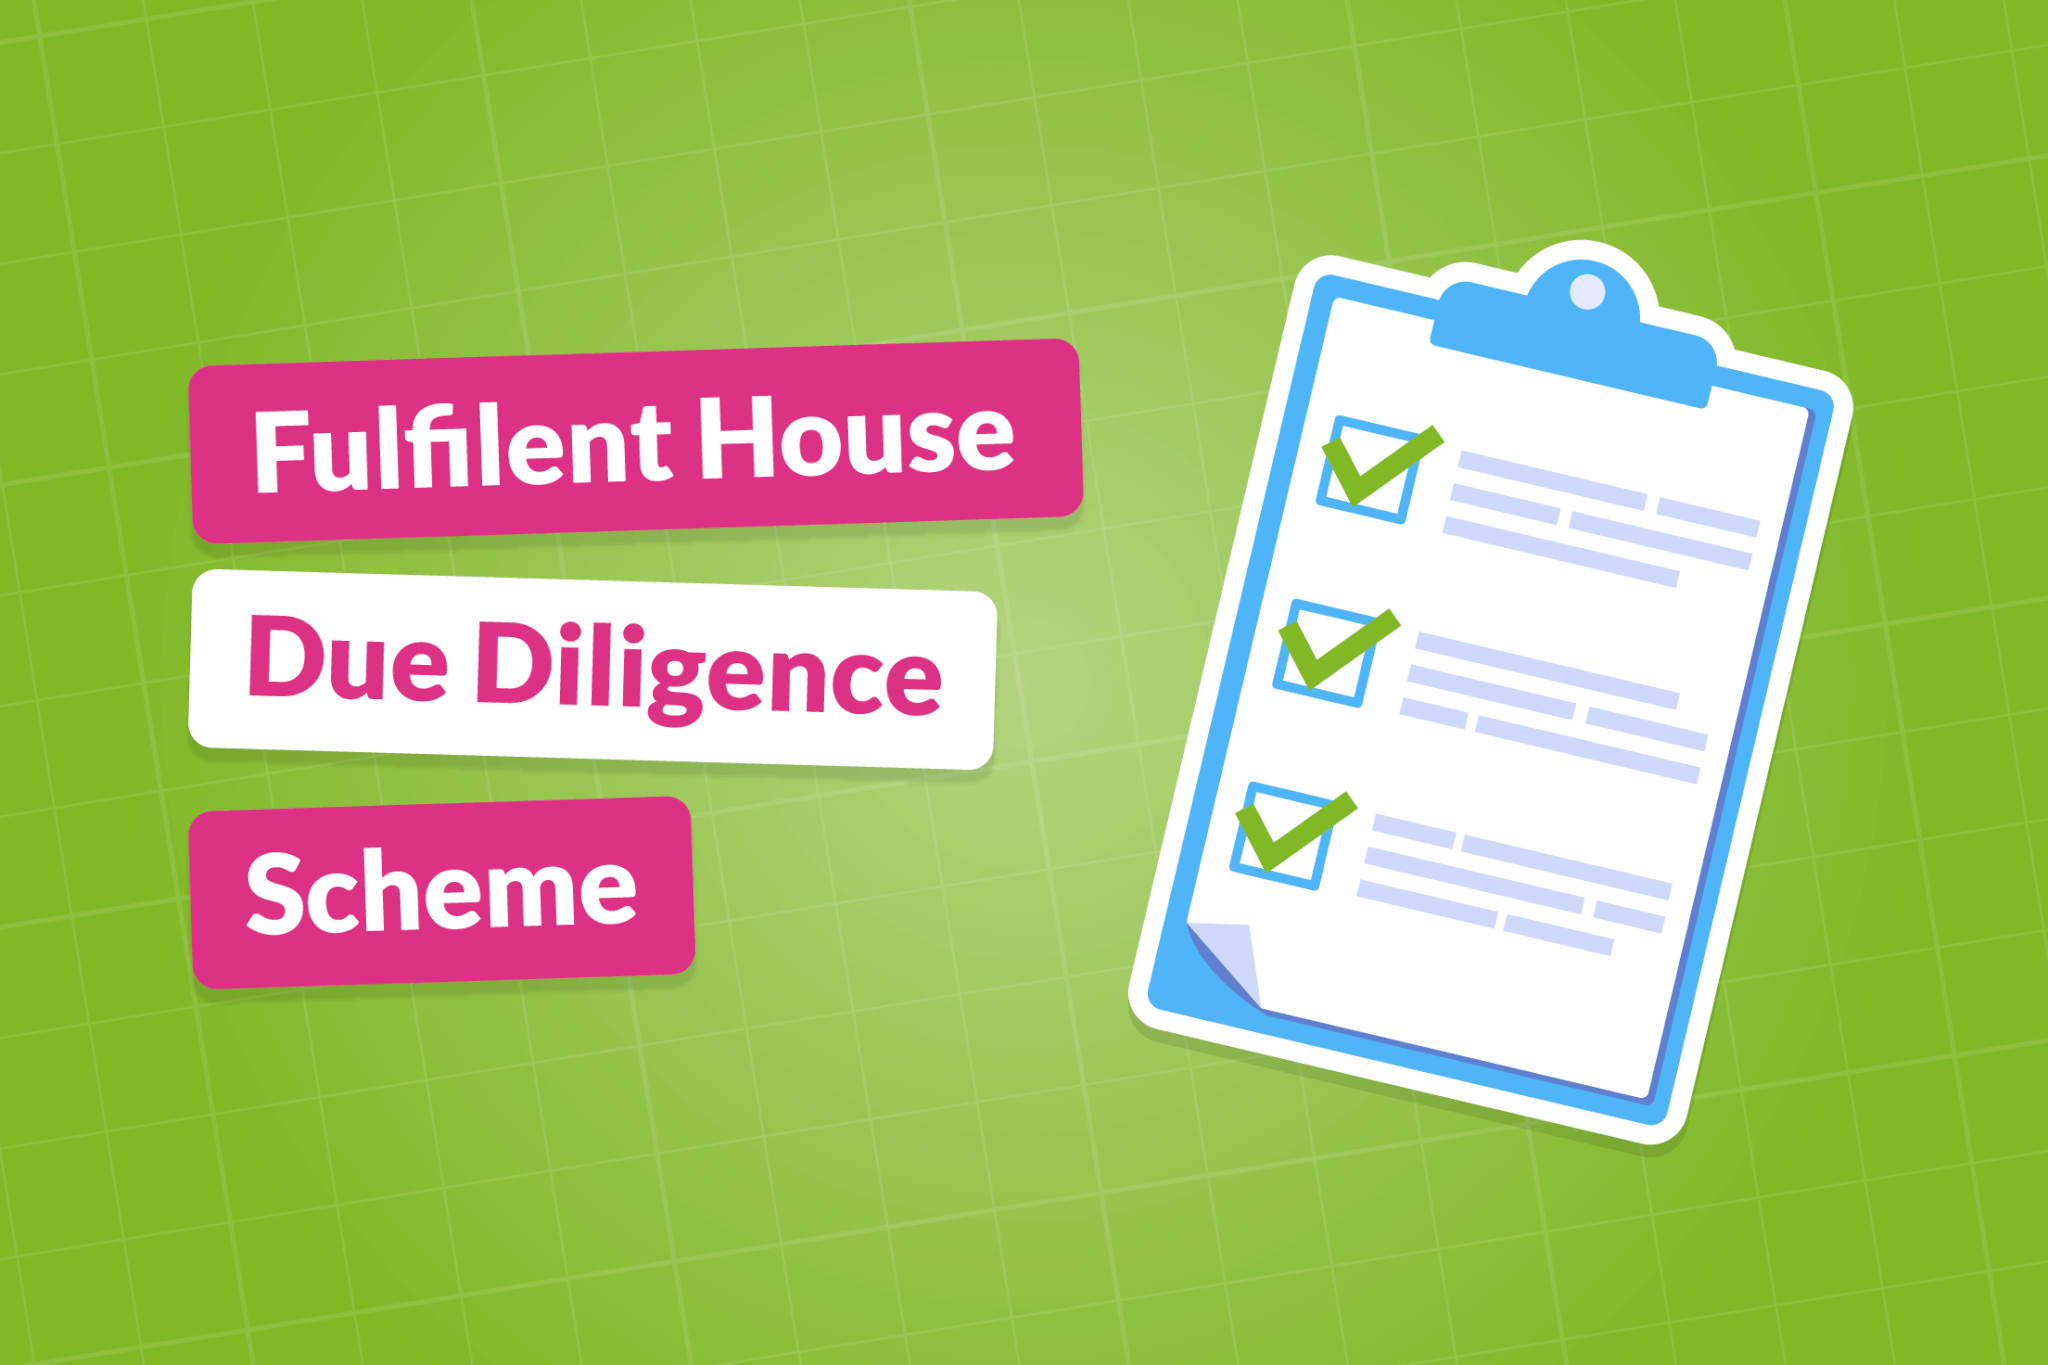 Fulfilment house due diligence scheme